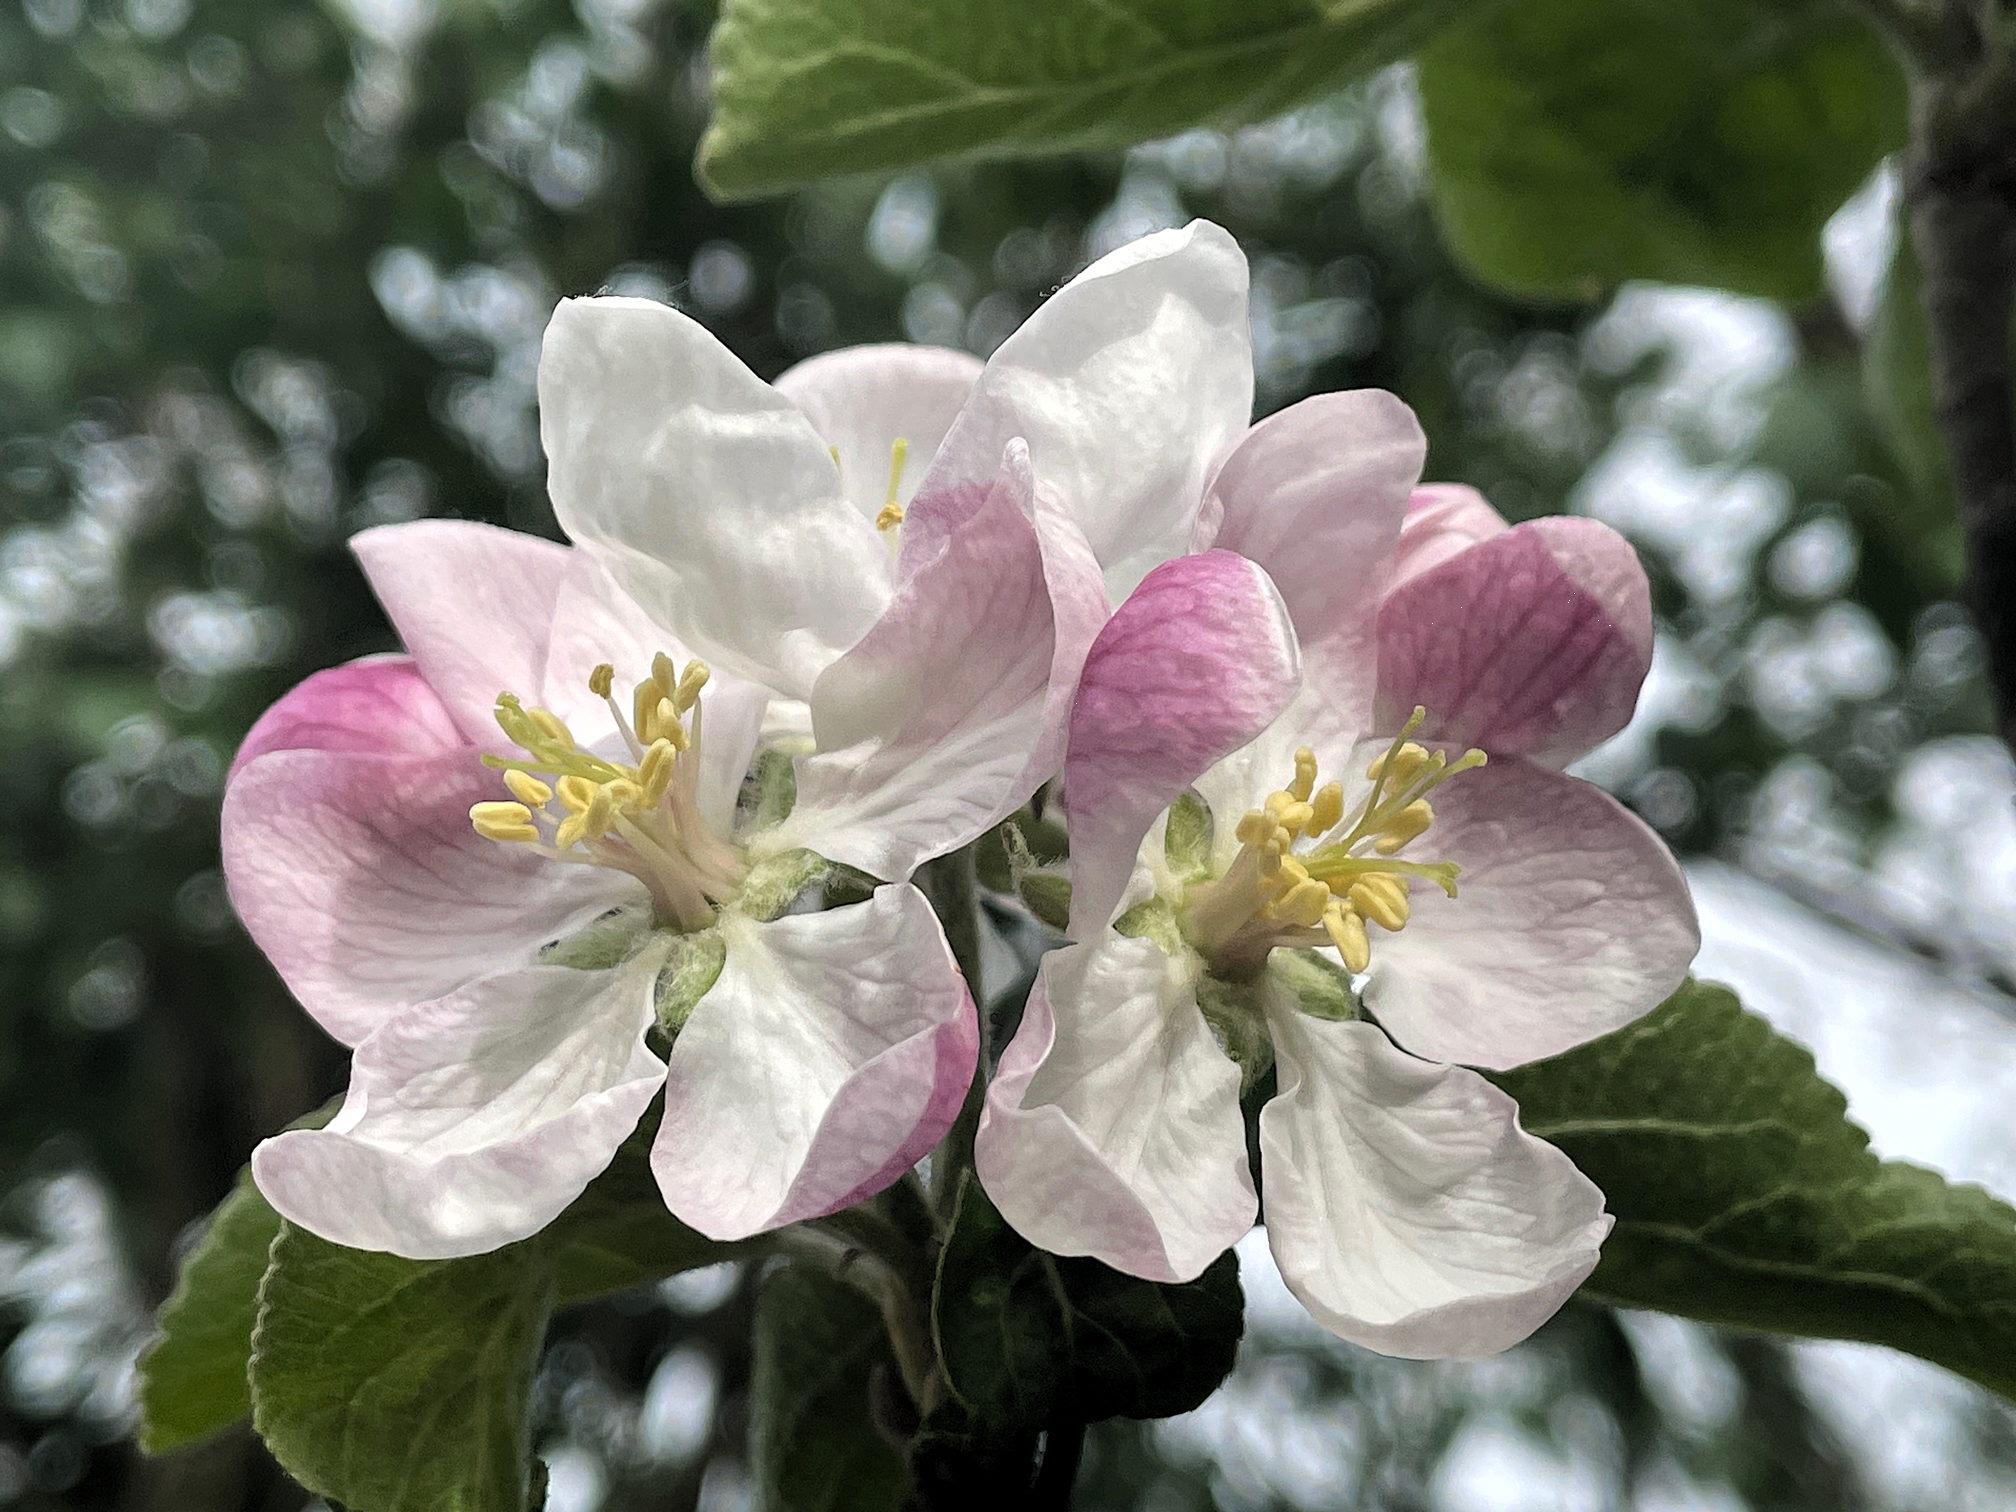 Blüte am Apfelbaum